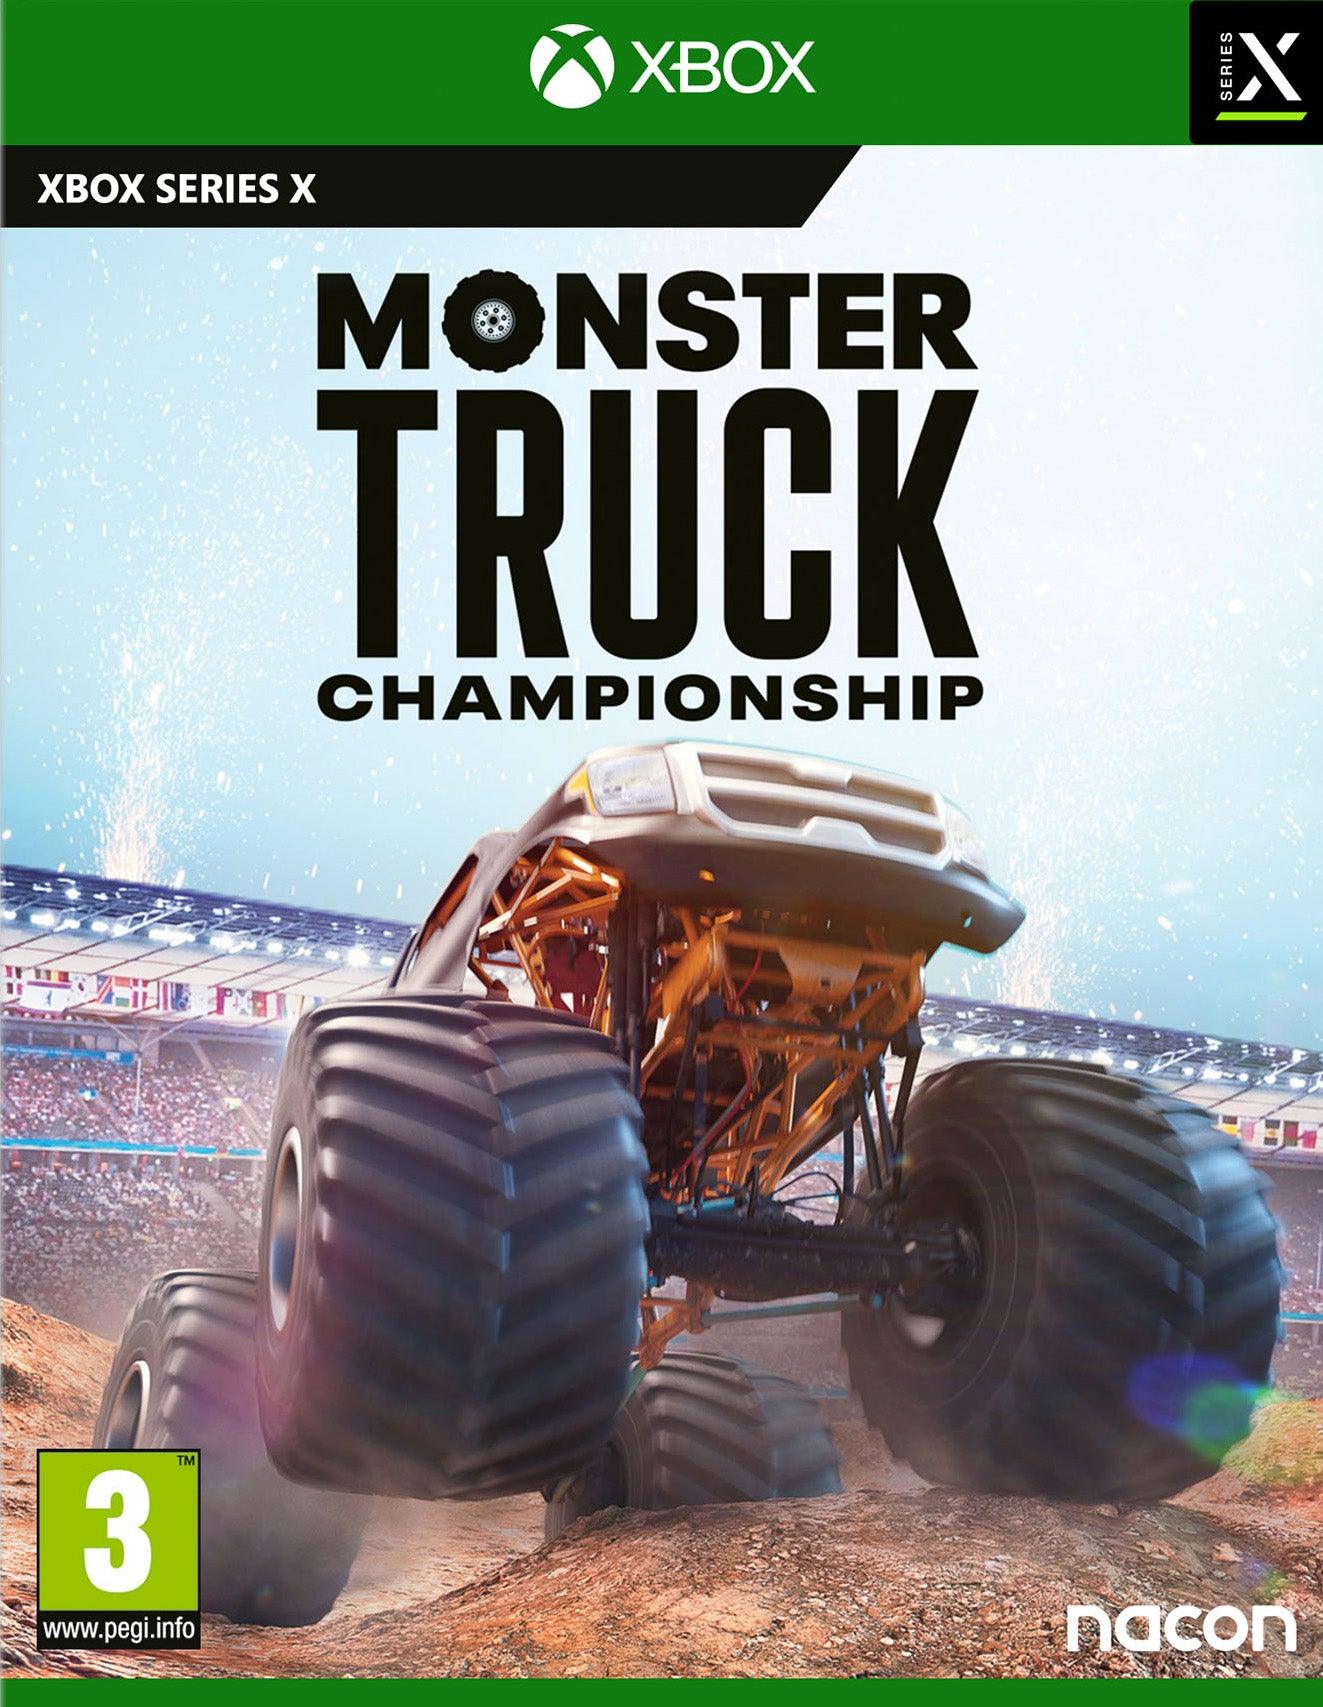 Monster Truck Championship - Want a New Gadget